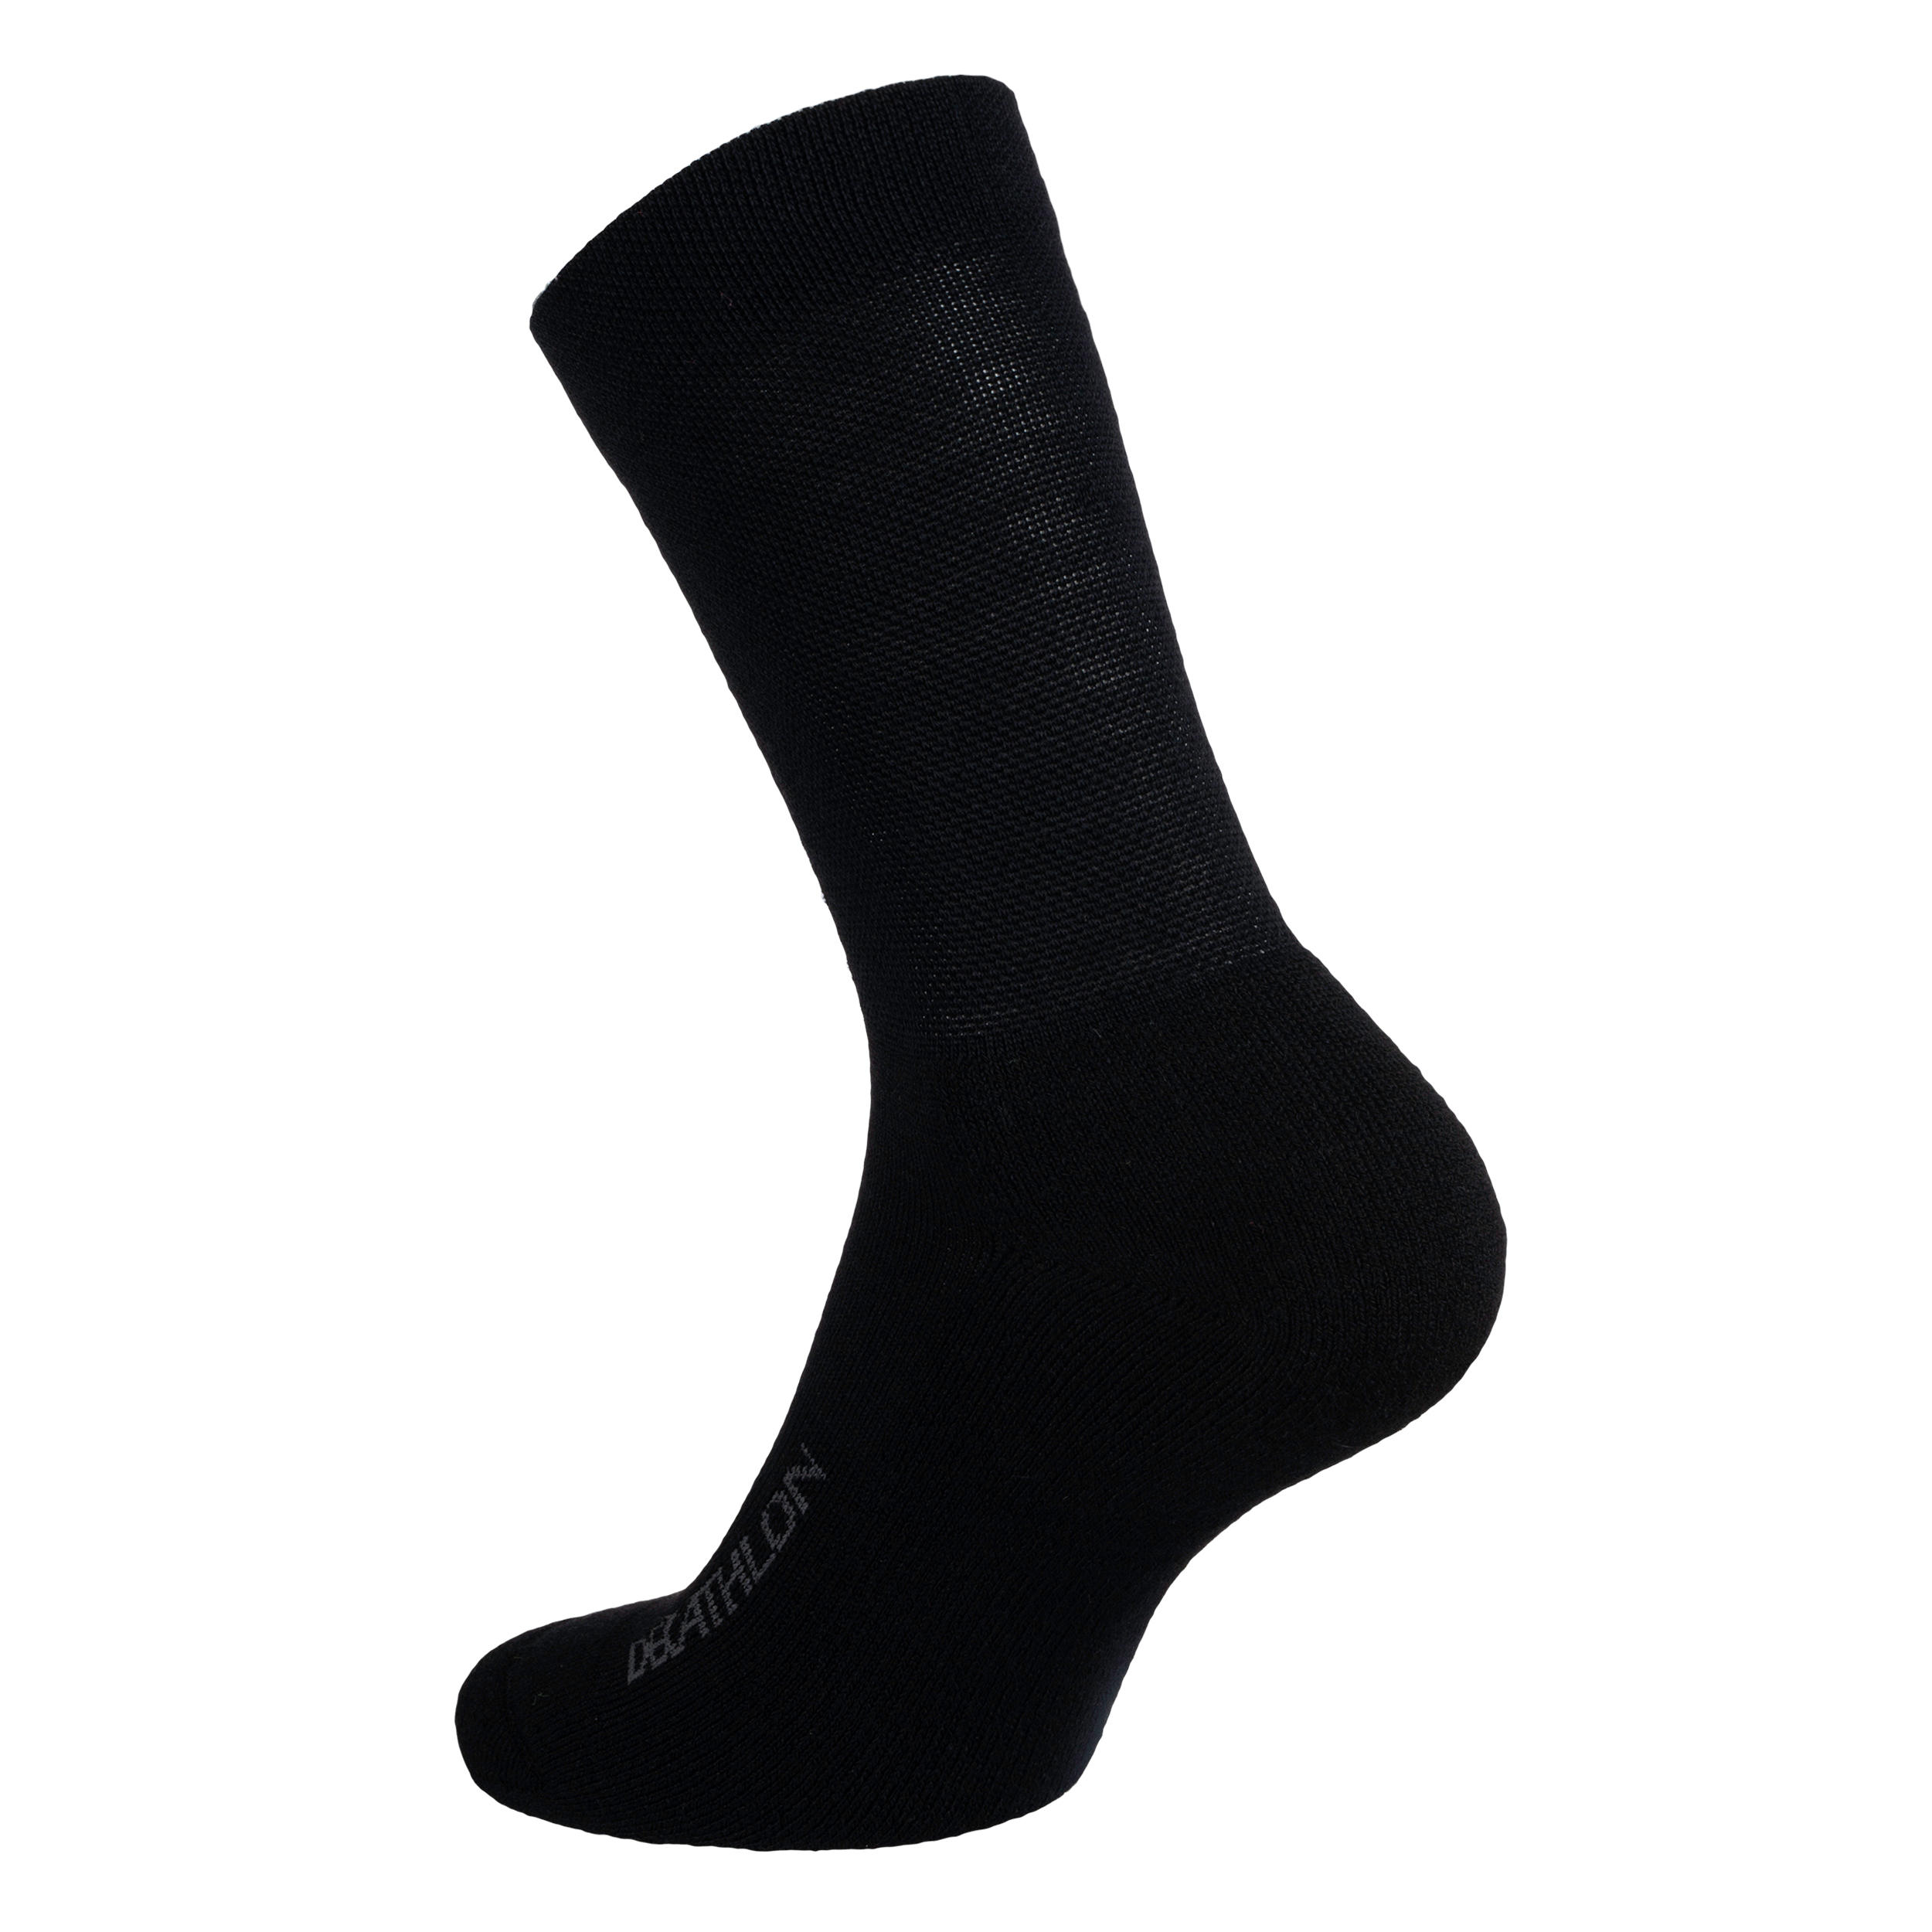 500 Winter Cycling Socks - Black 2/3